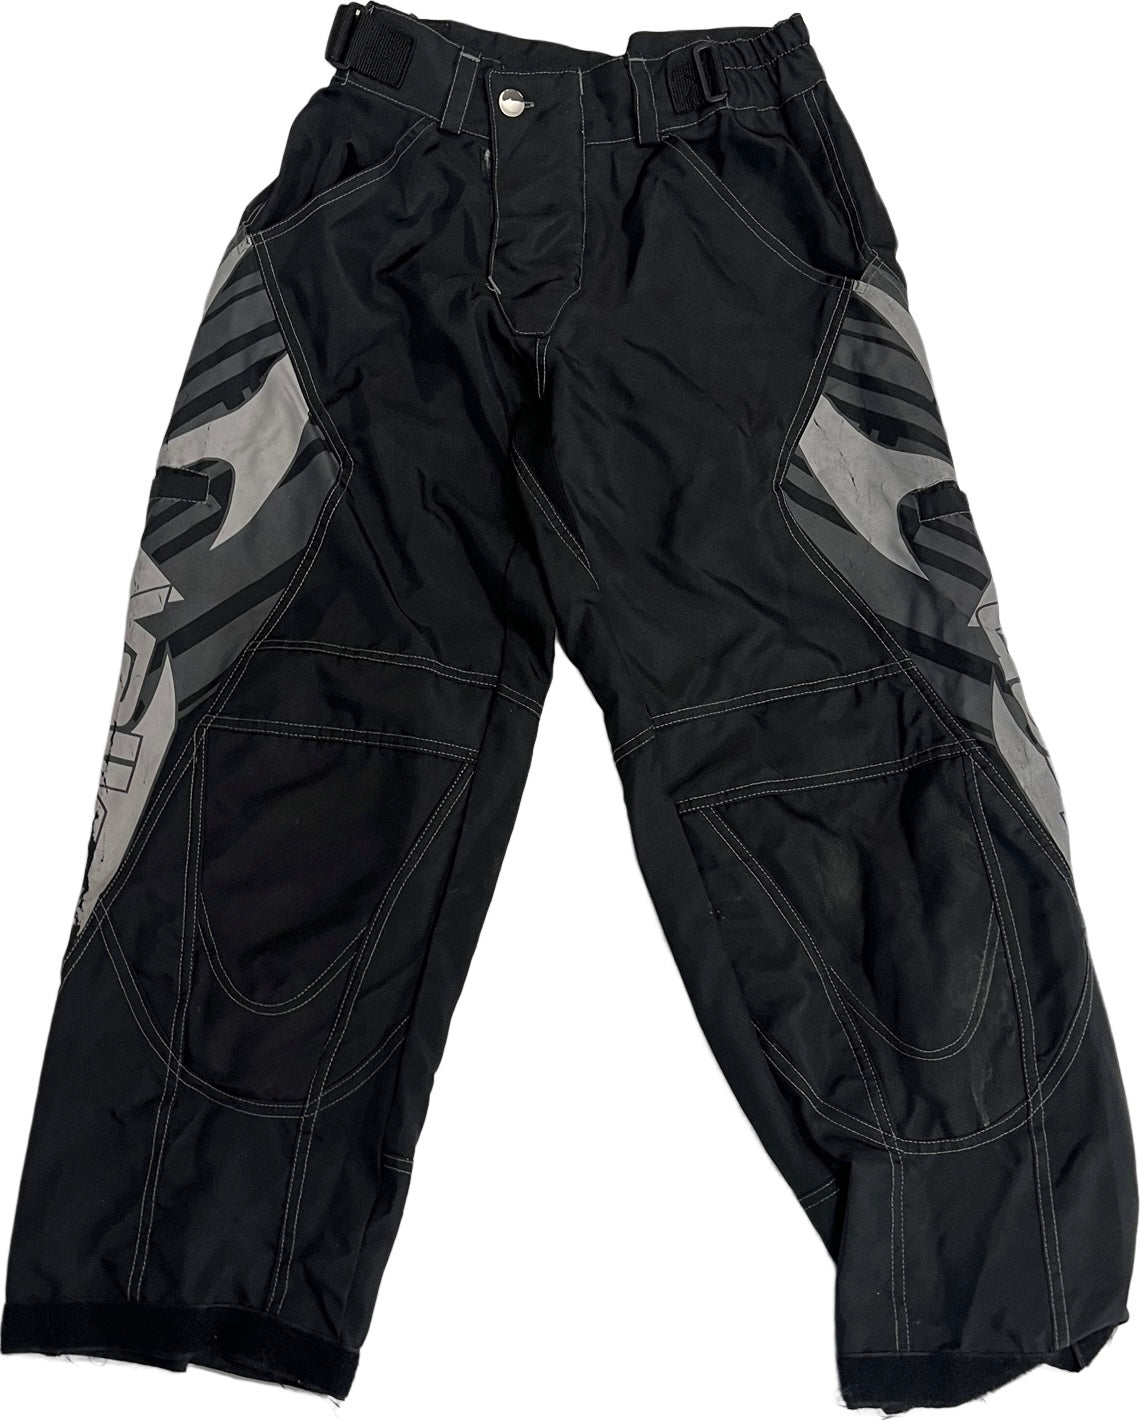 Valken Pants - Black/Grey - L